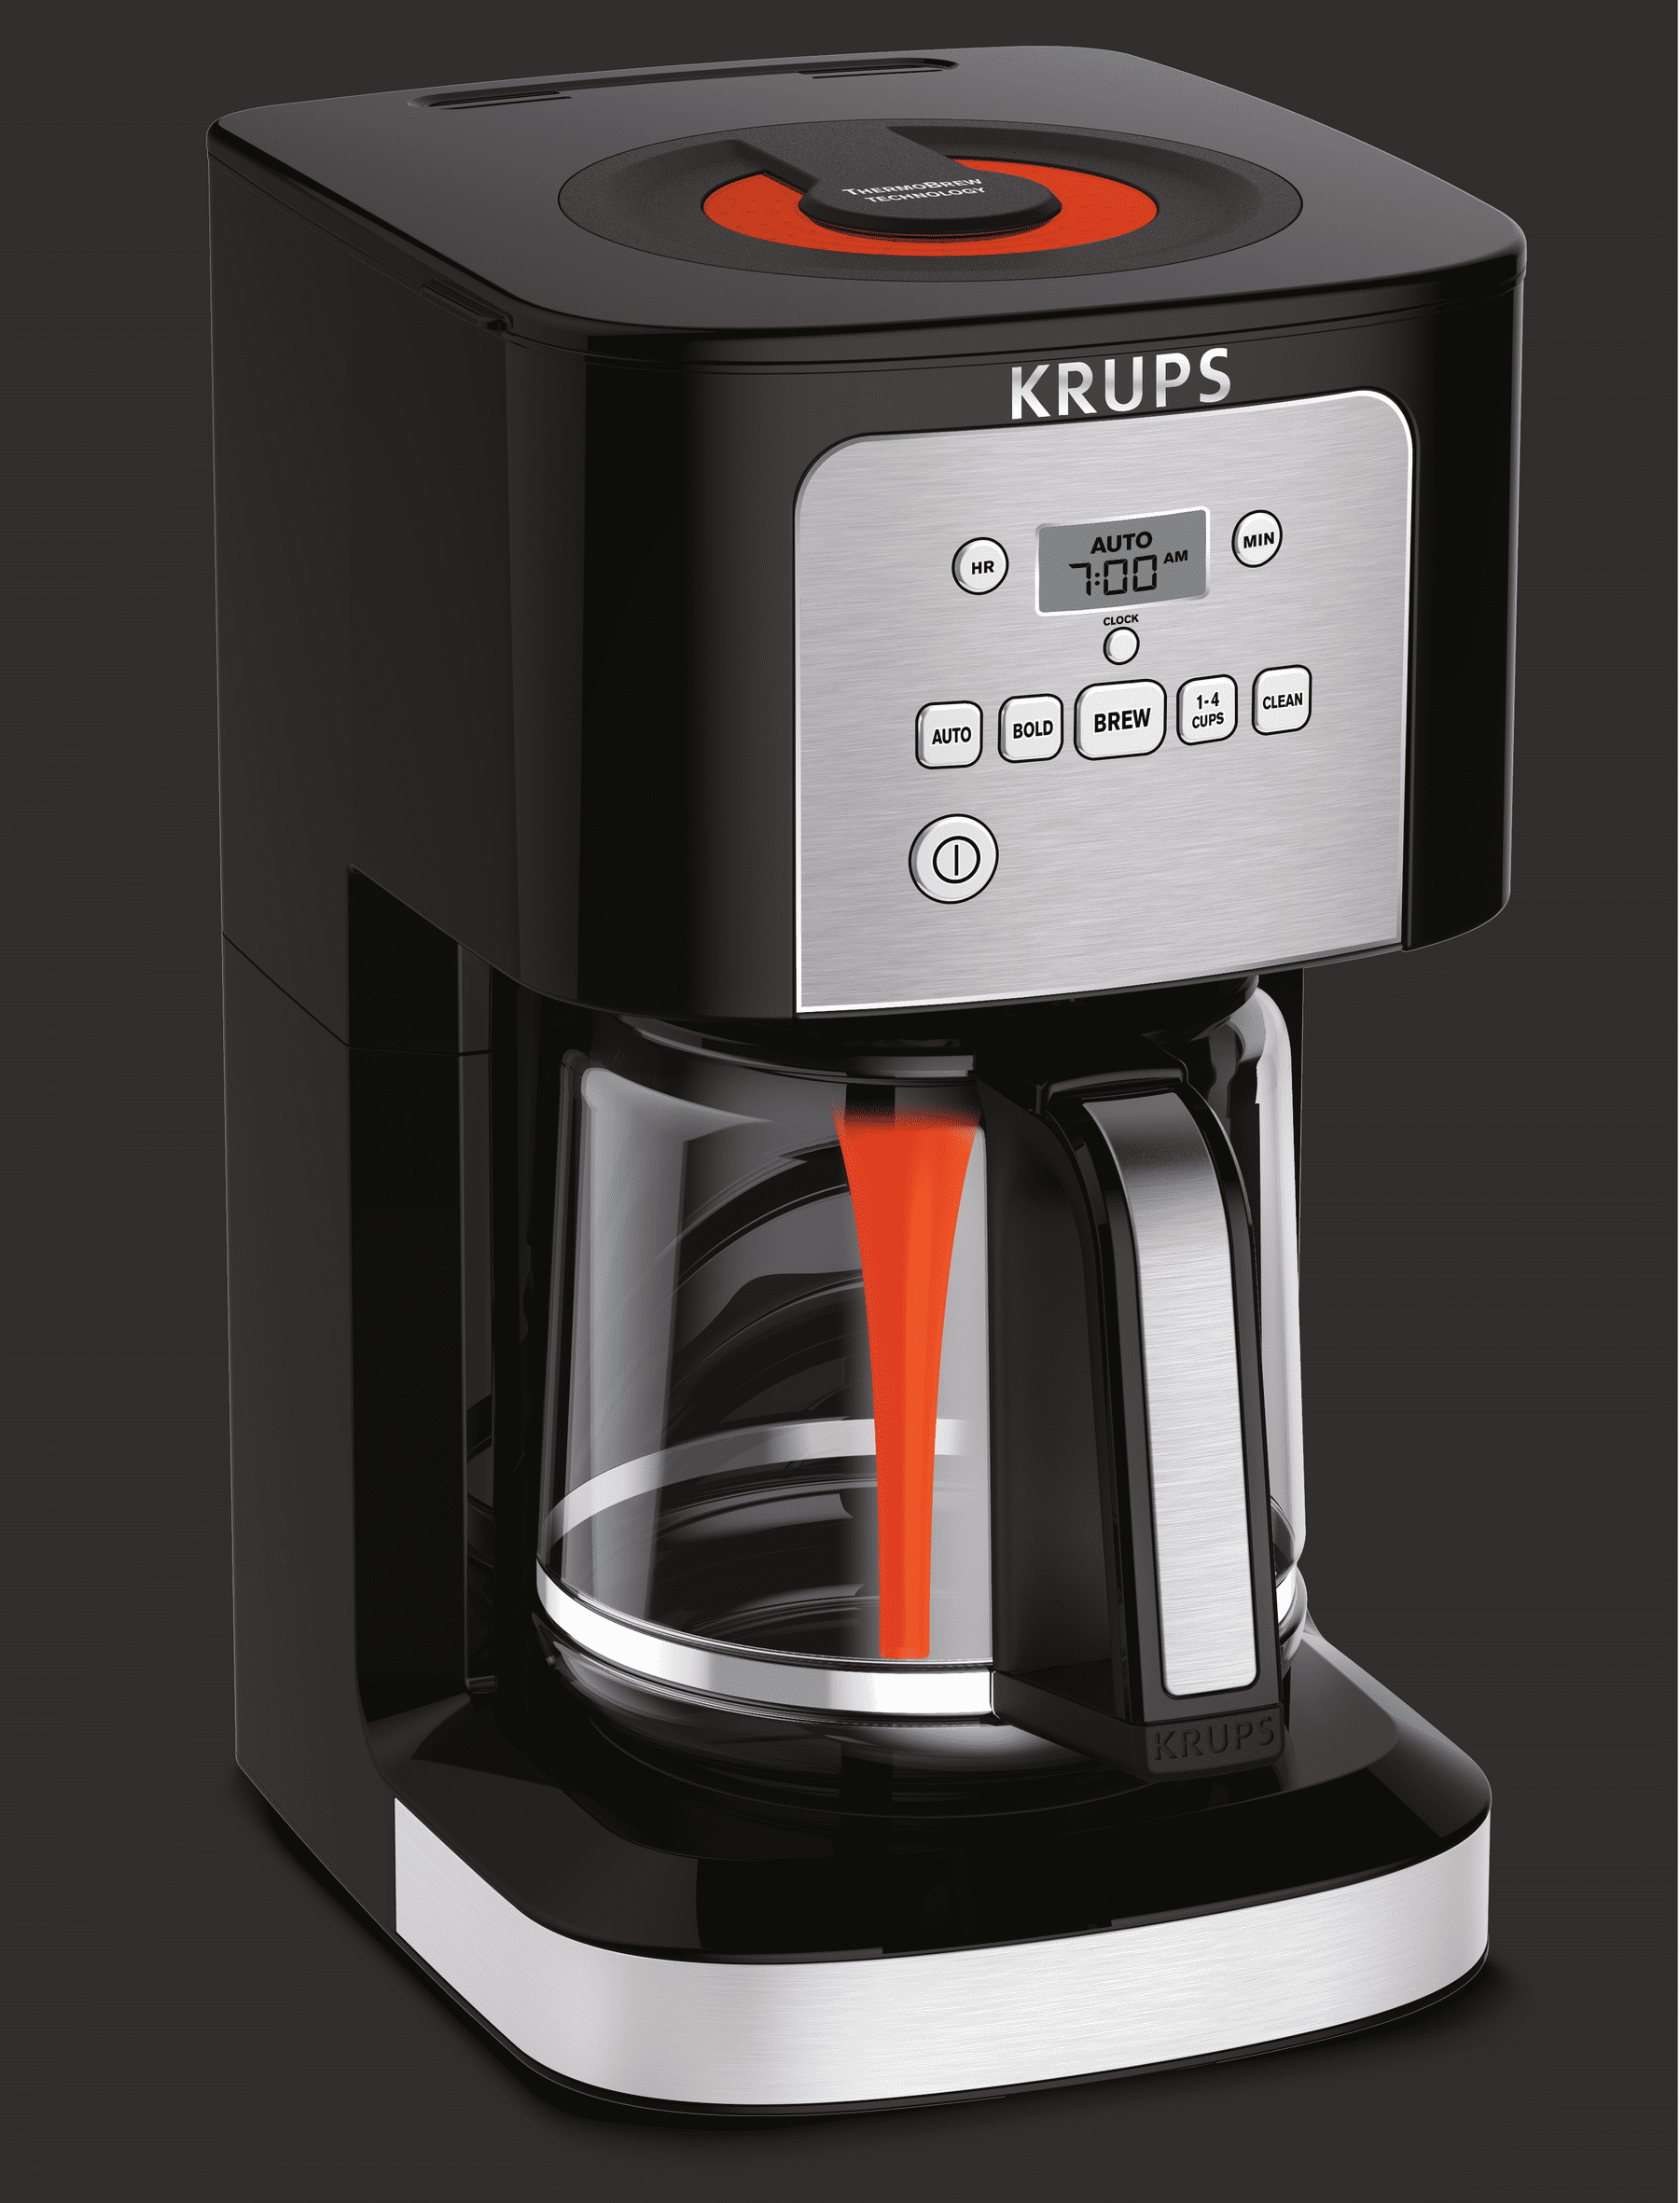 KRUPS KRUPS EC324 14-CUP THERMOBREW PROGRAMMABLE COFFEE MAKER EC324050